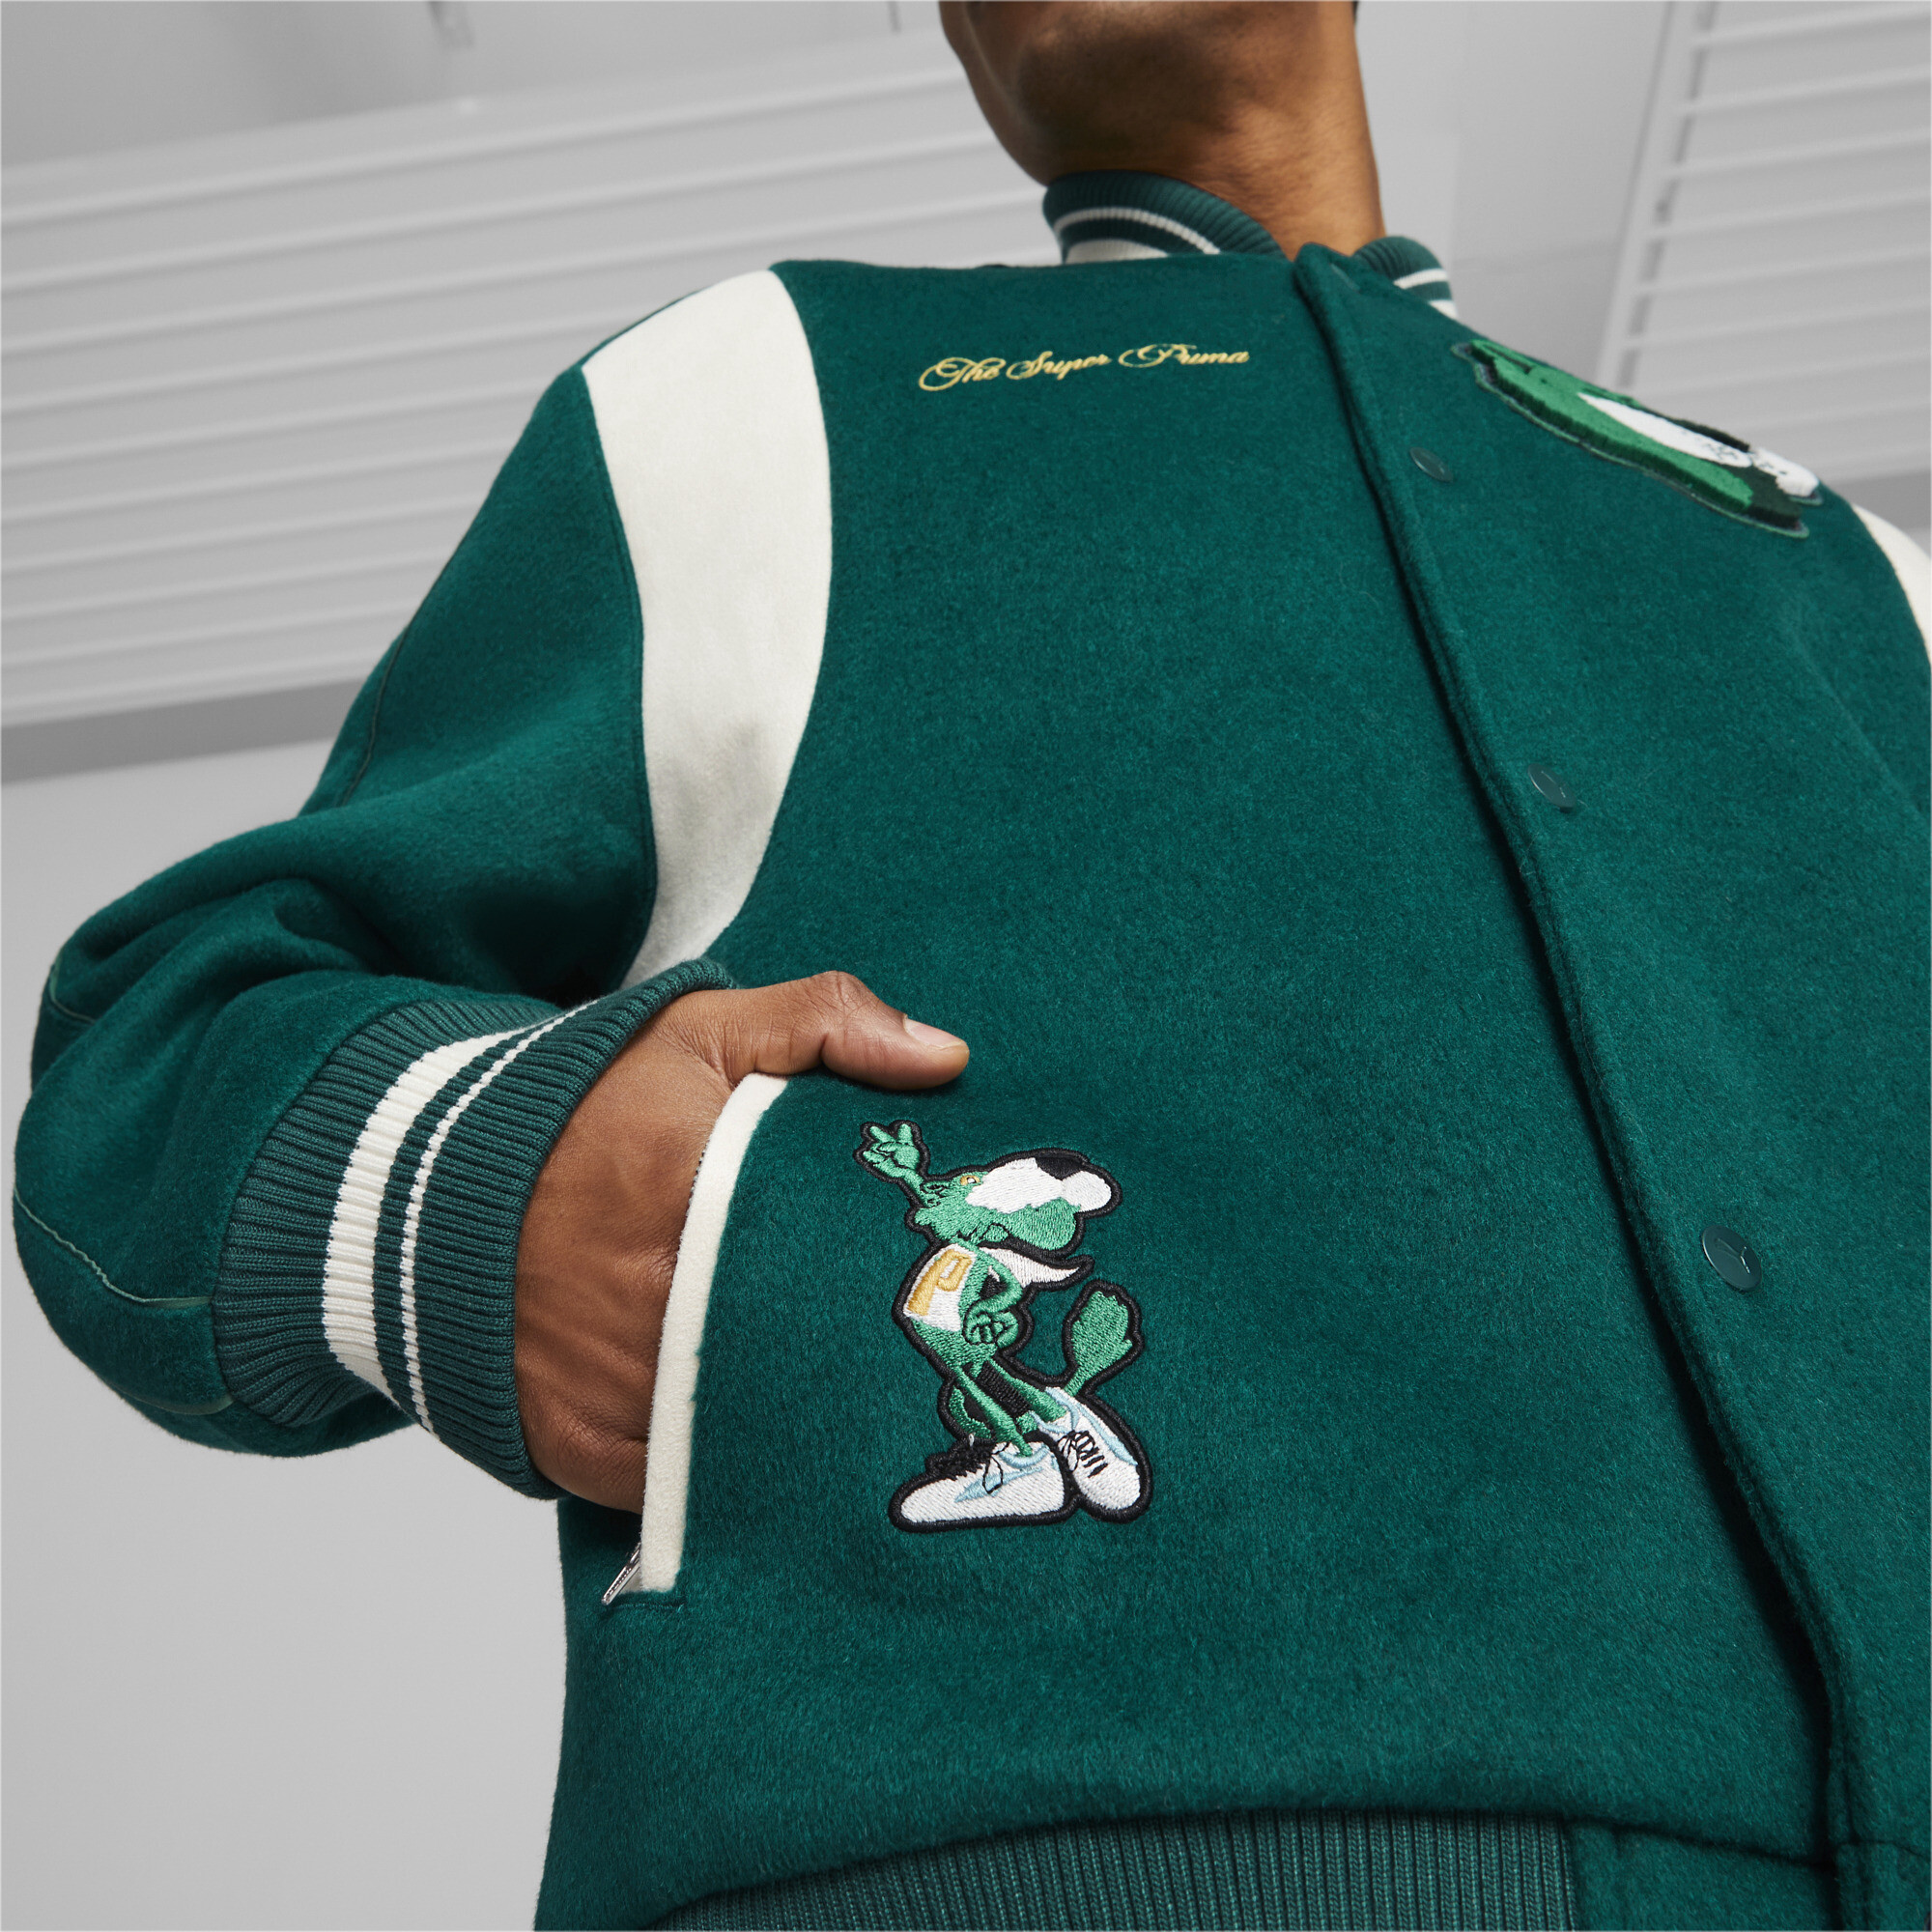 Men's PUMA The Mascot T7 College Jacket Men In 40 - Green, Size Small